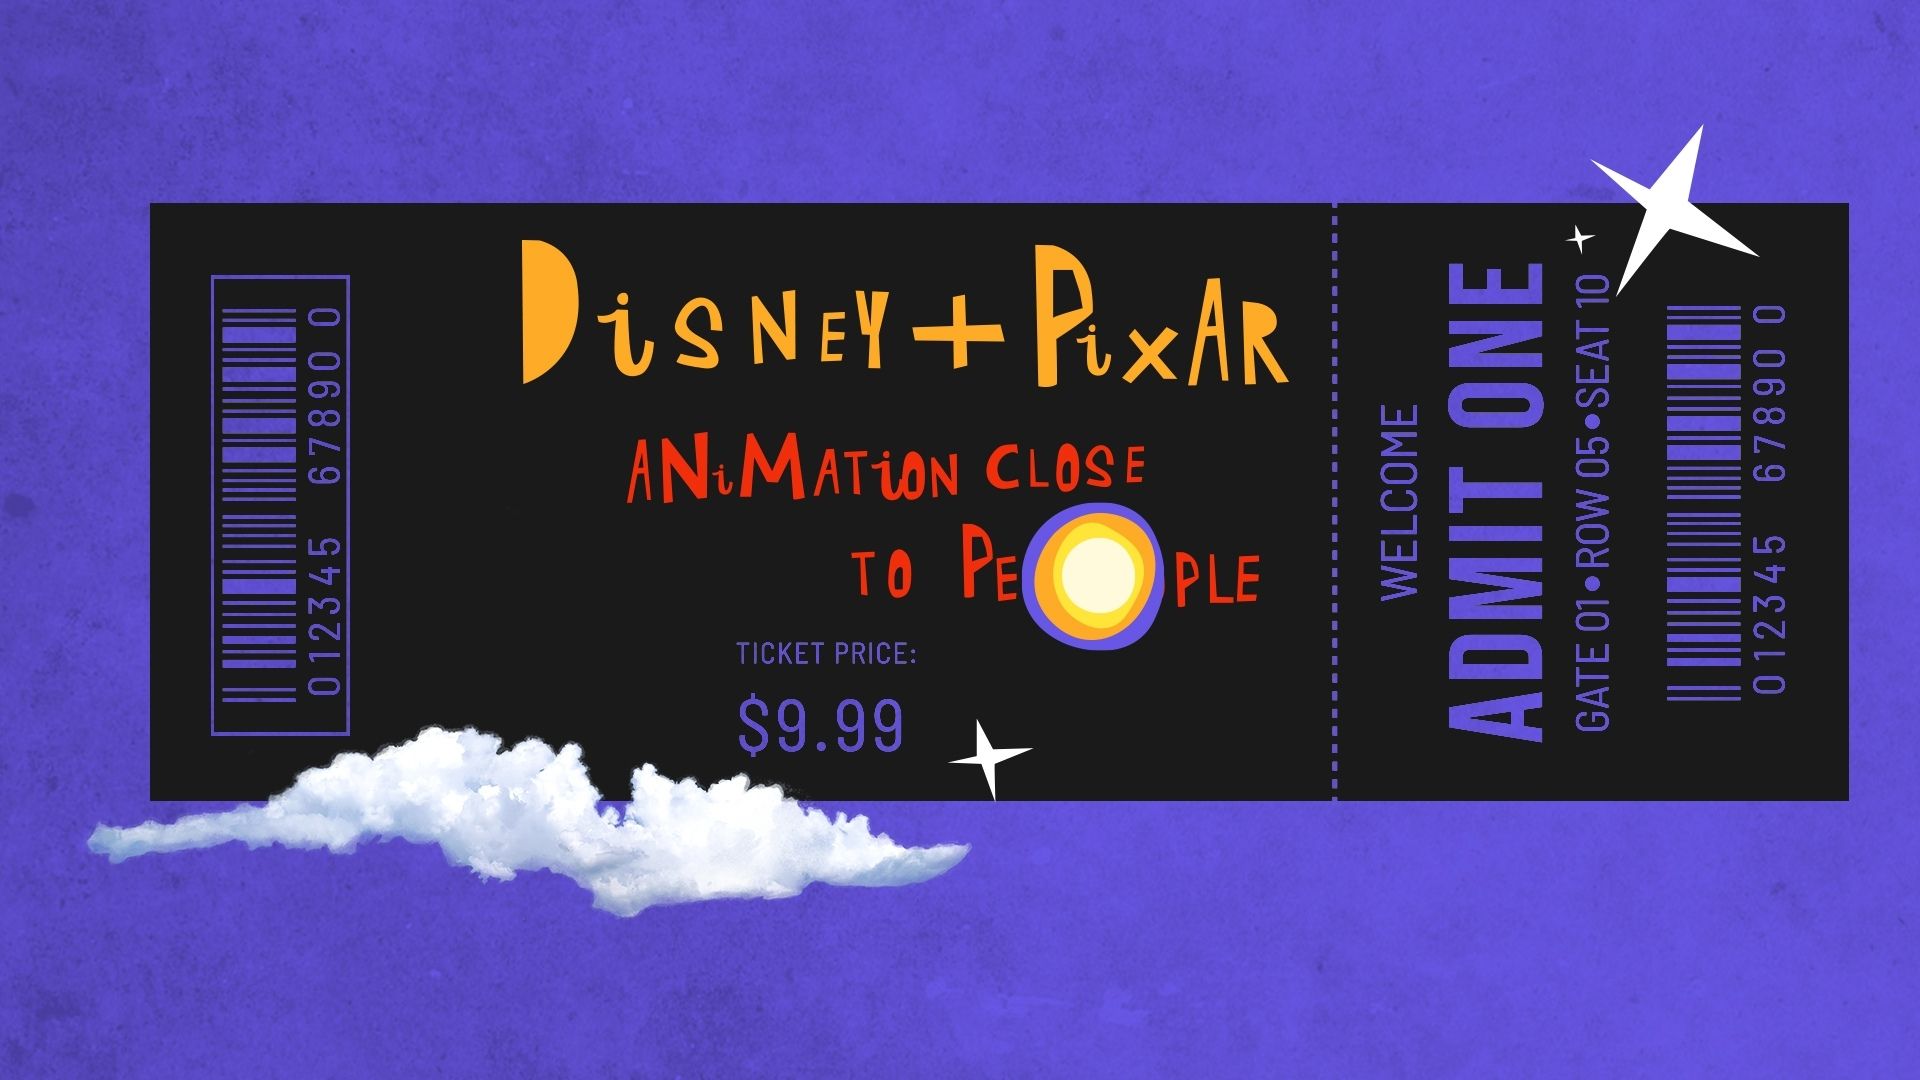 Disney Pixar’s Soul